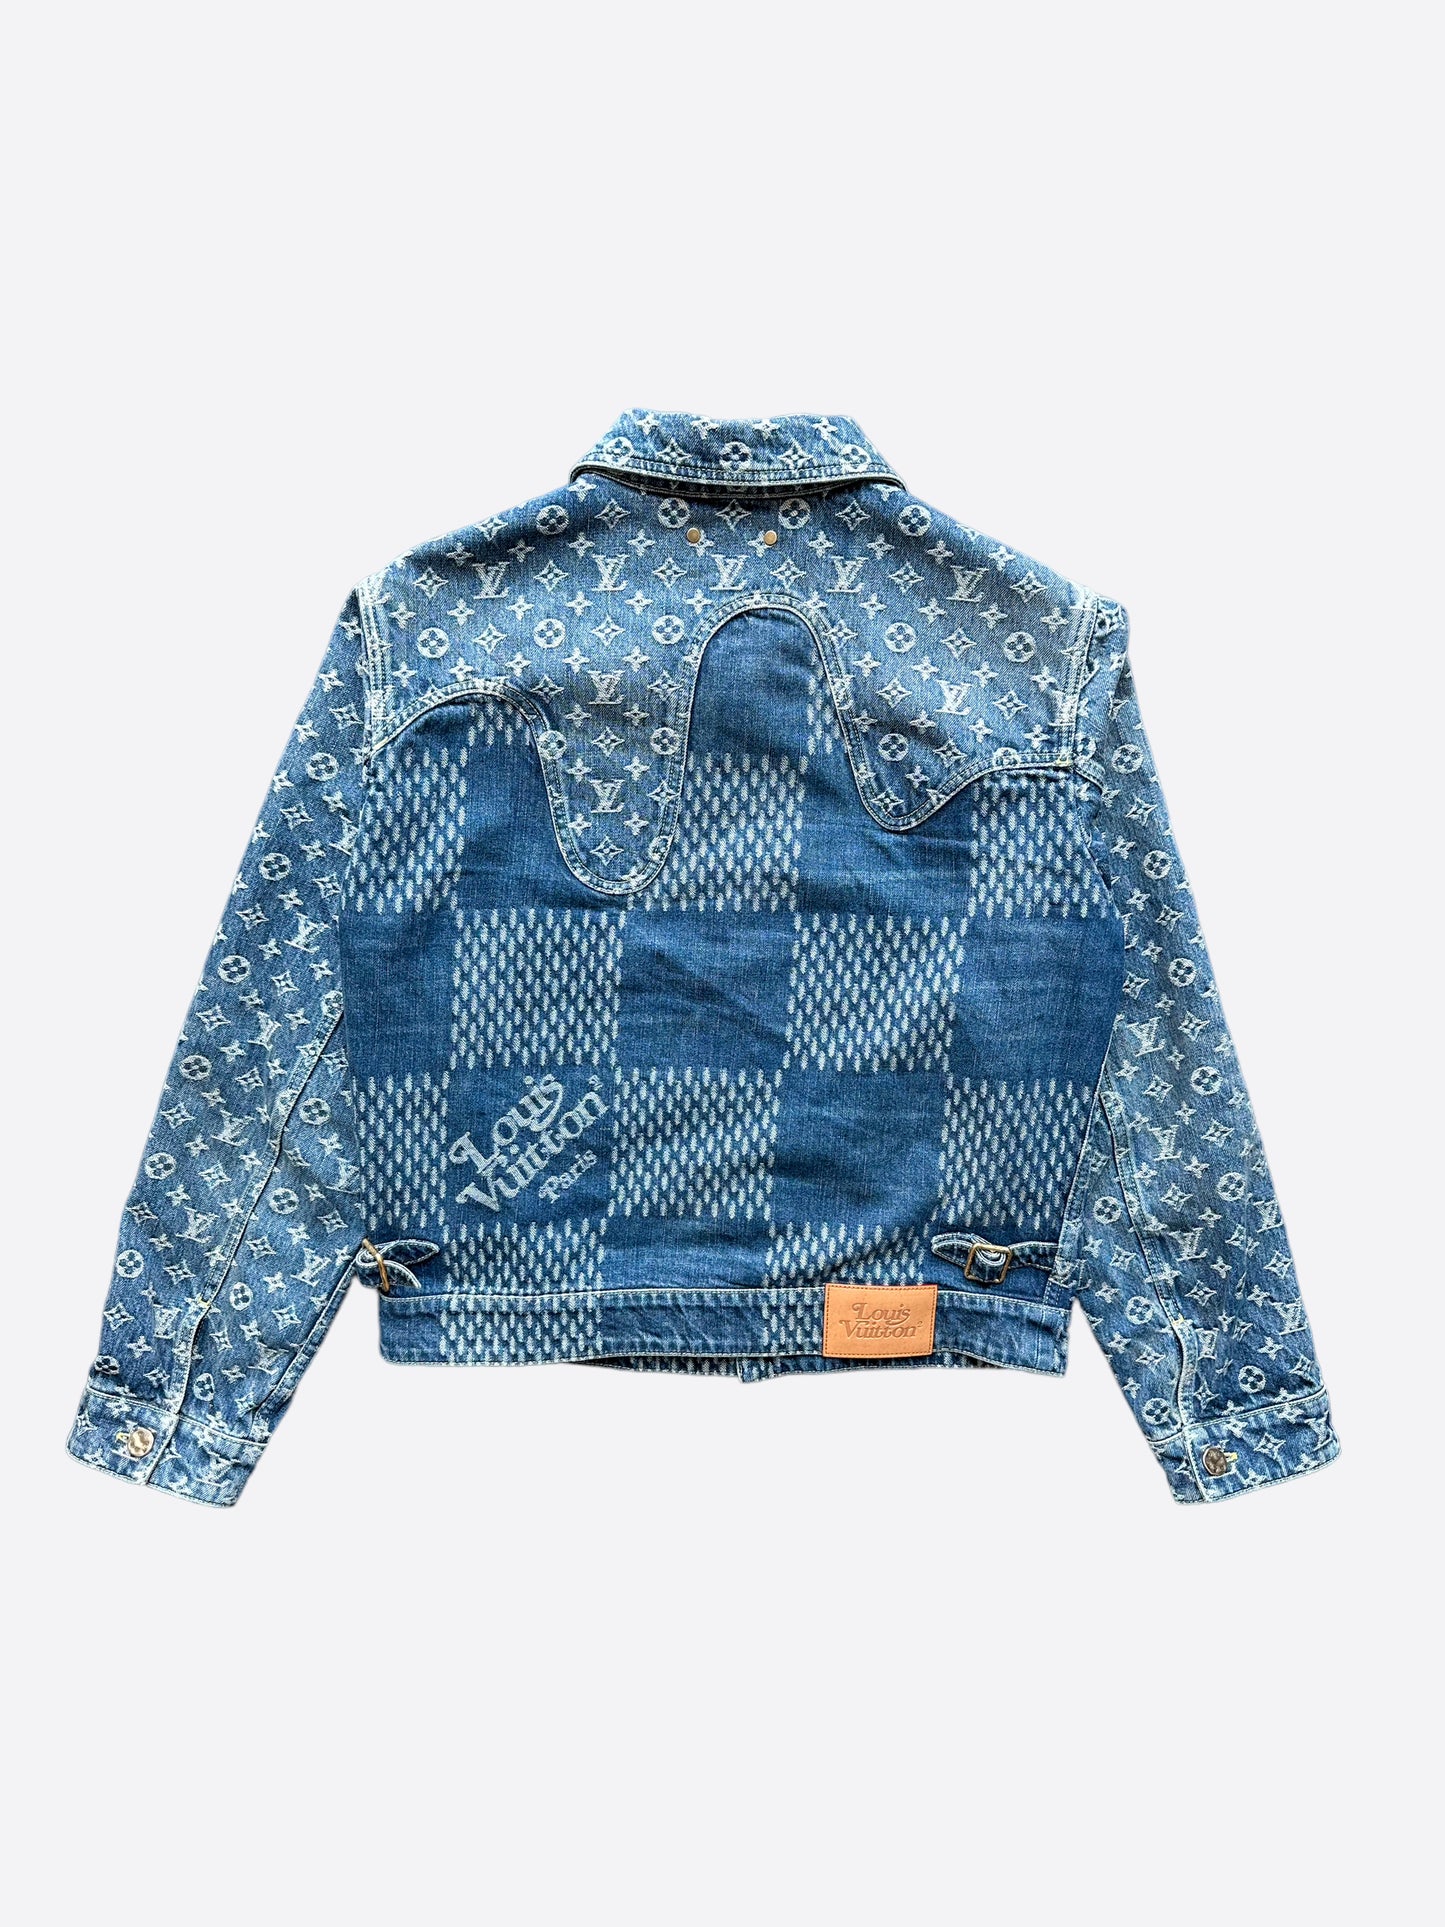 Louis Vuitton x Nigo 2022 Printed Denim Jacket